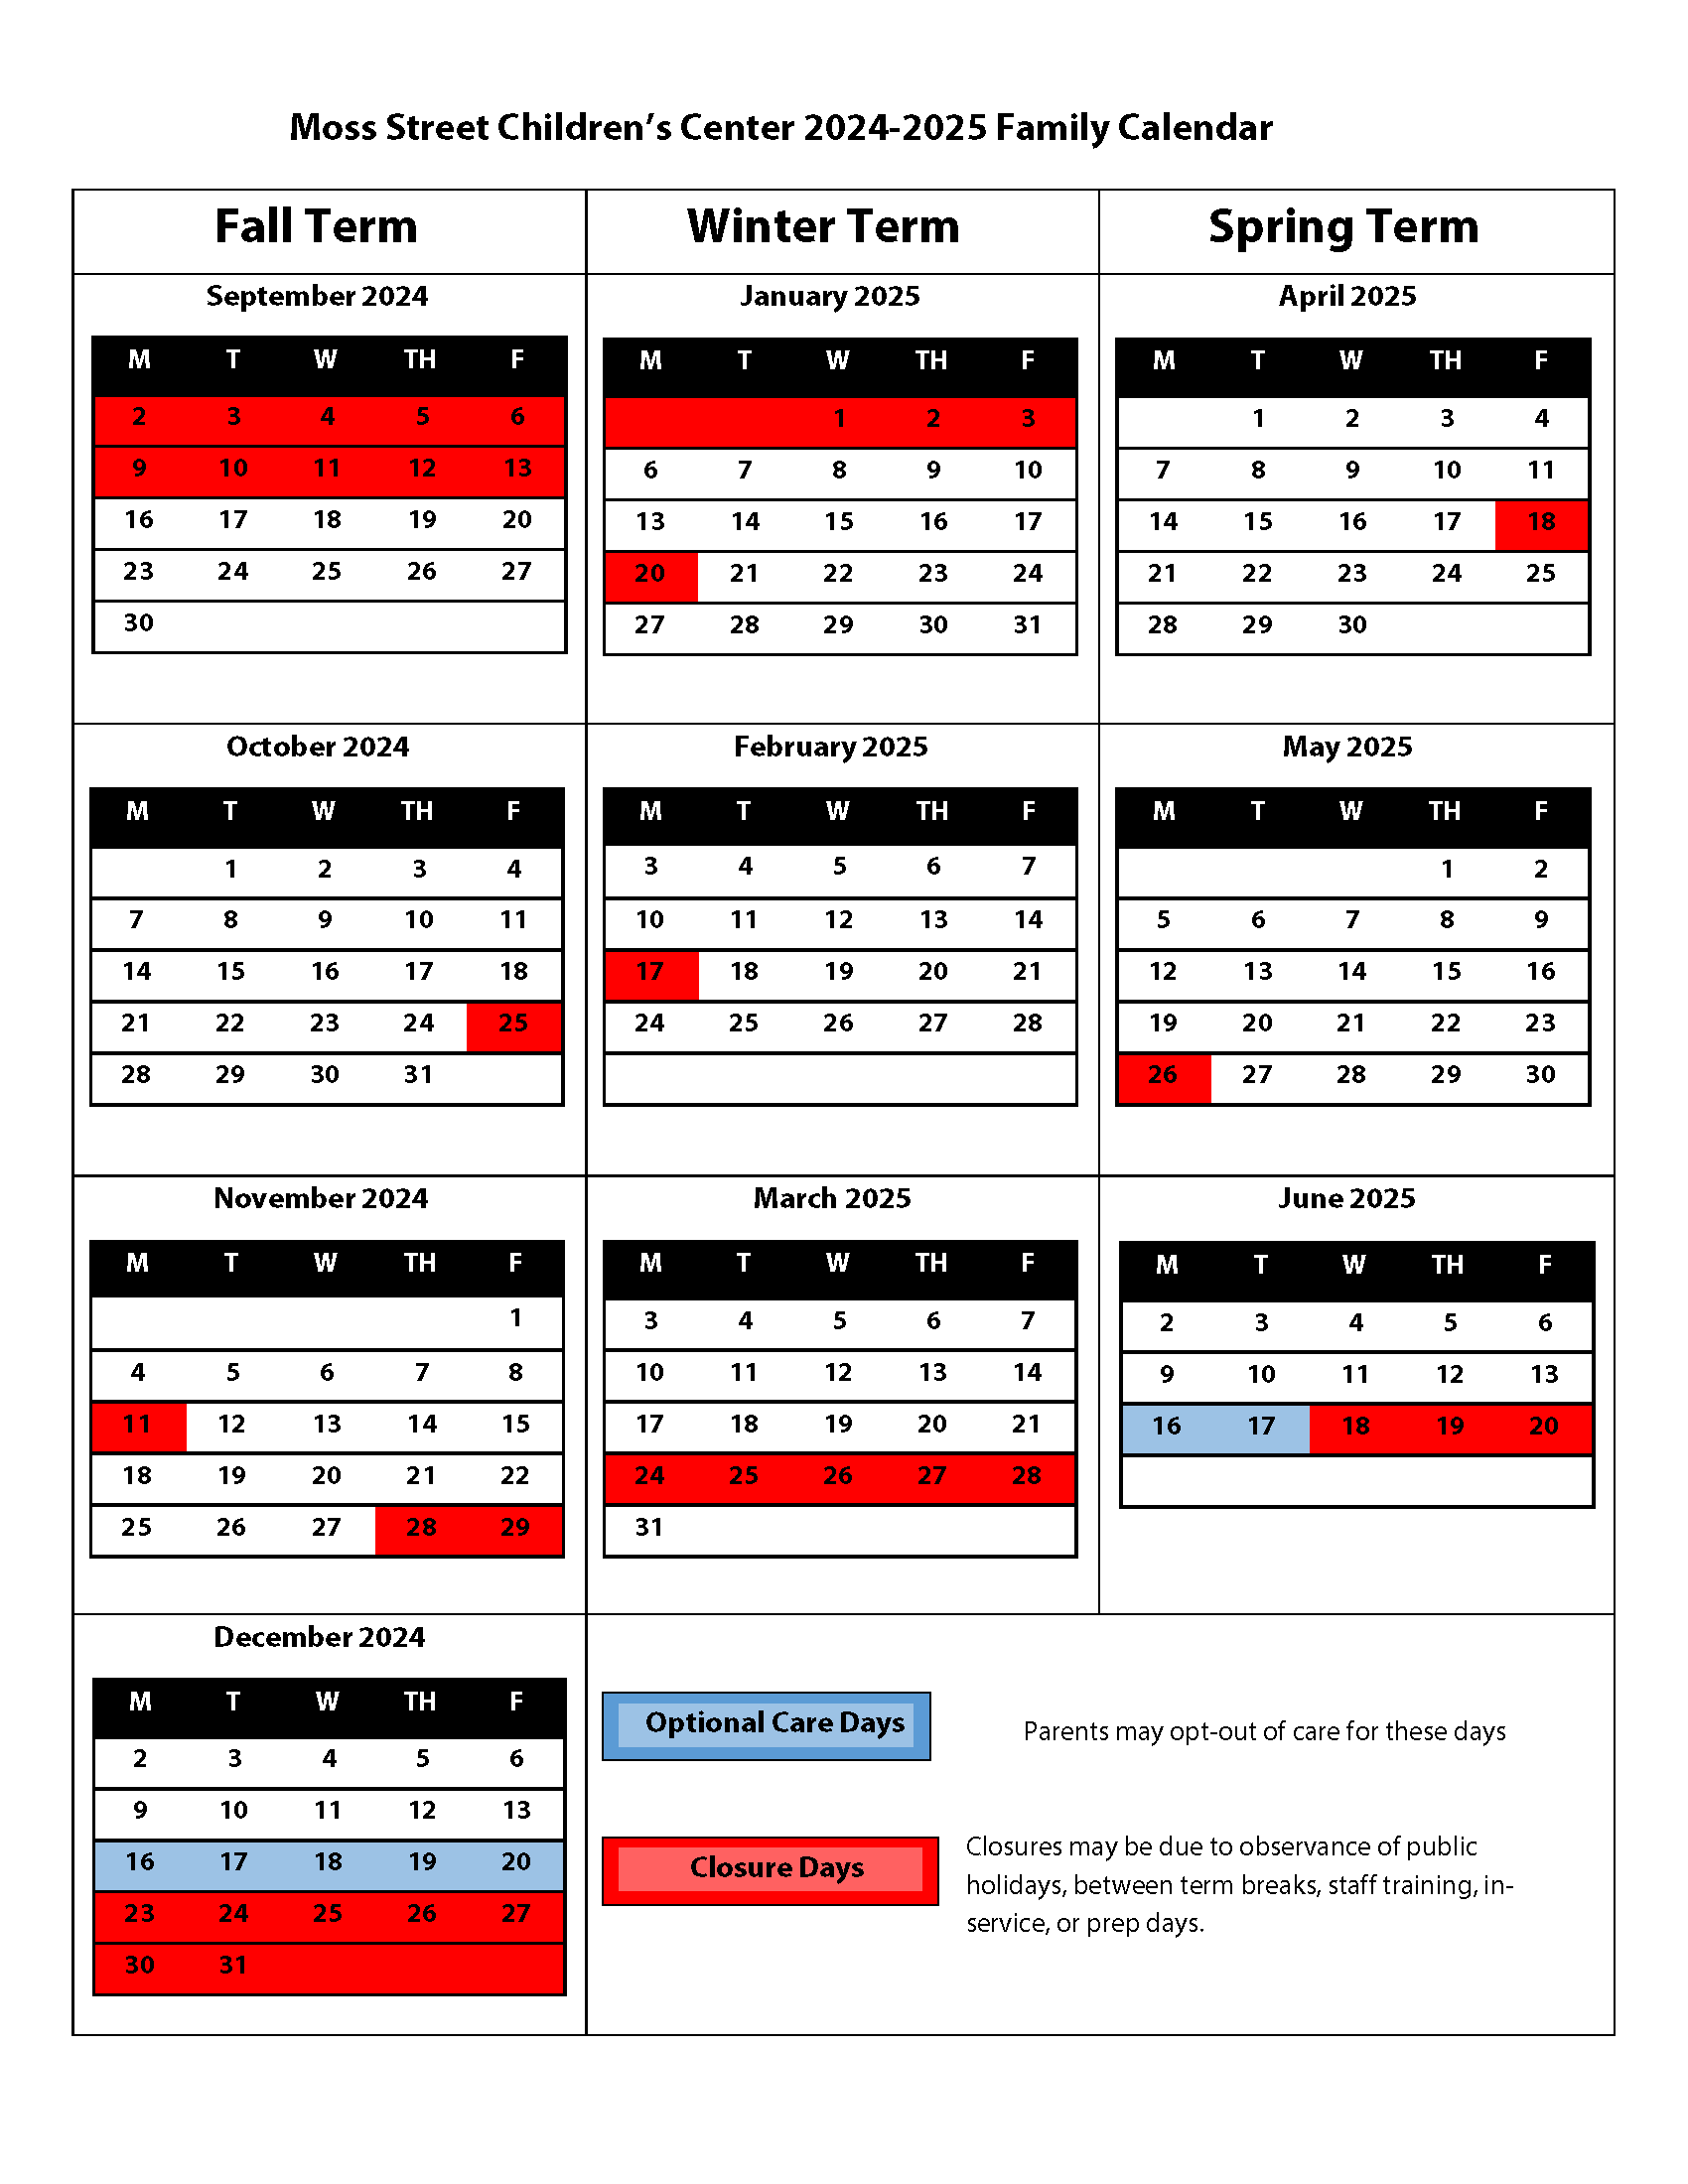 image of calendar grid